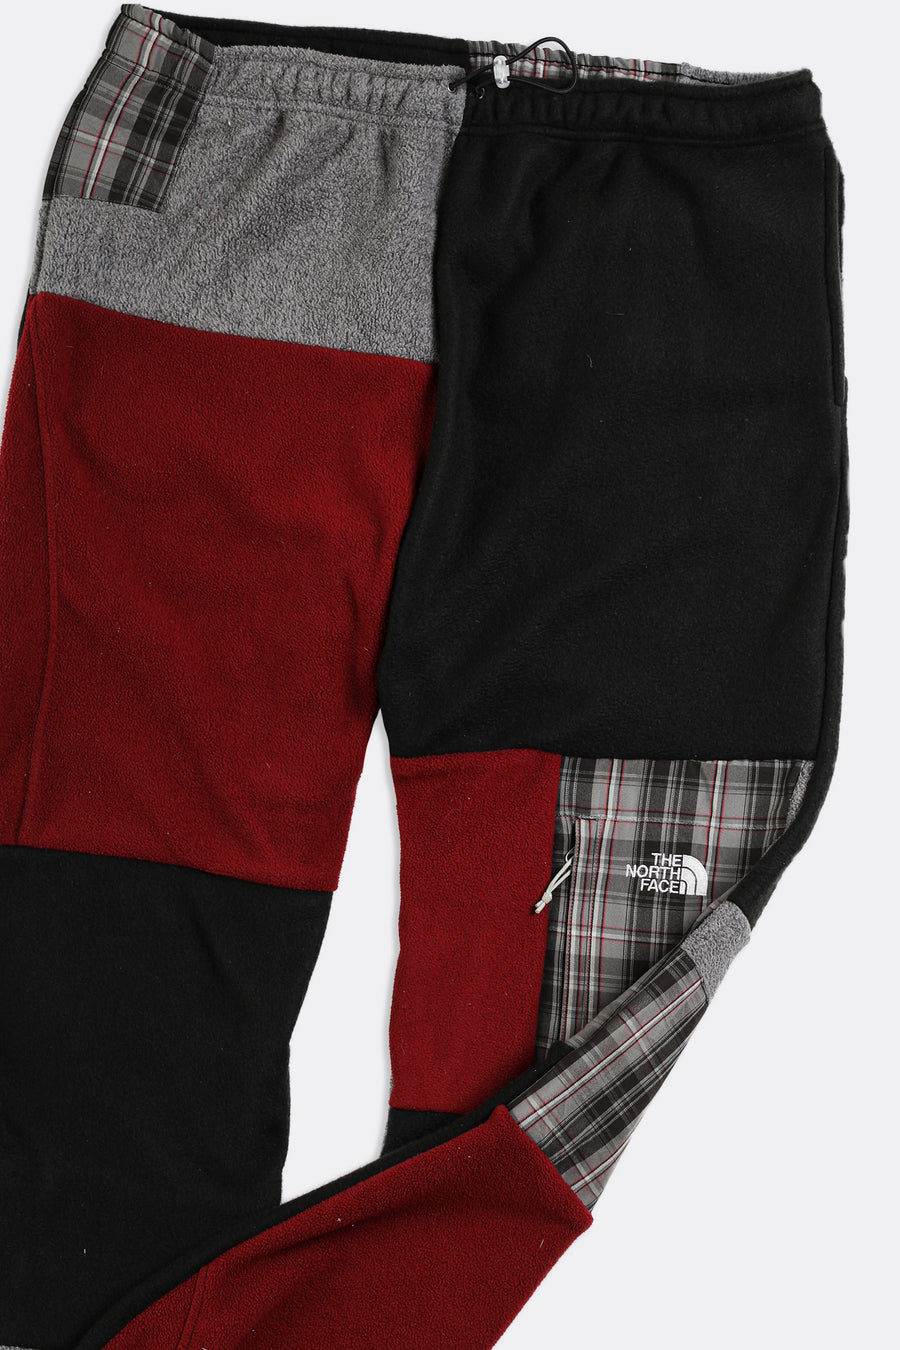 Unisex Rework North Face Patchwork Fleece Pant - Women-2XL, Men-XL